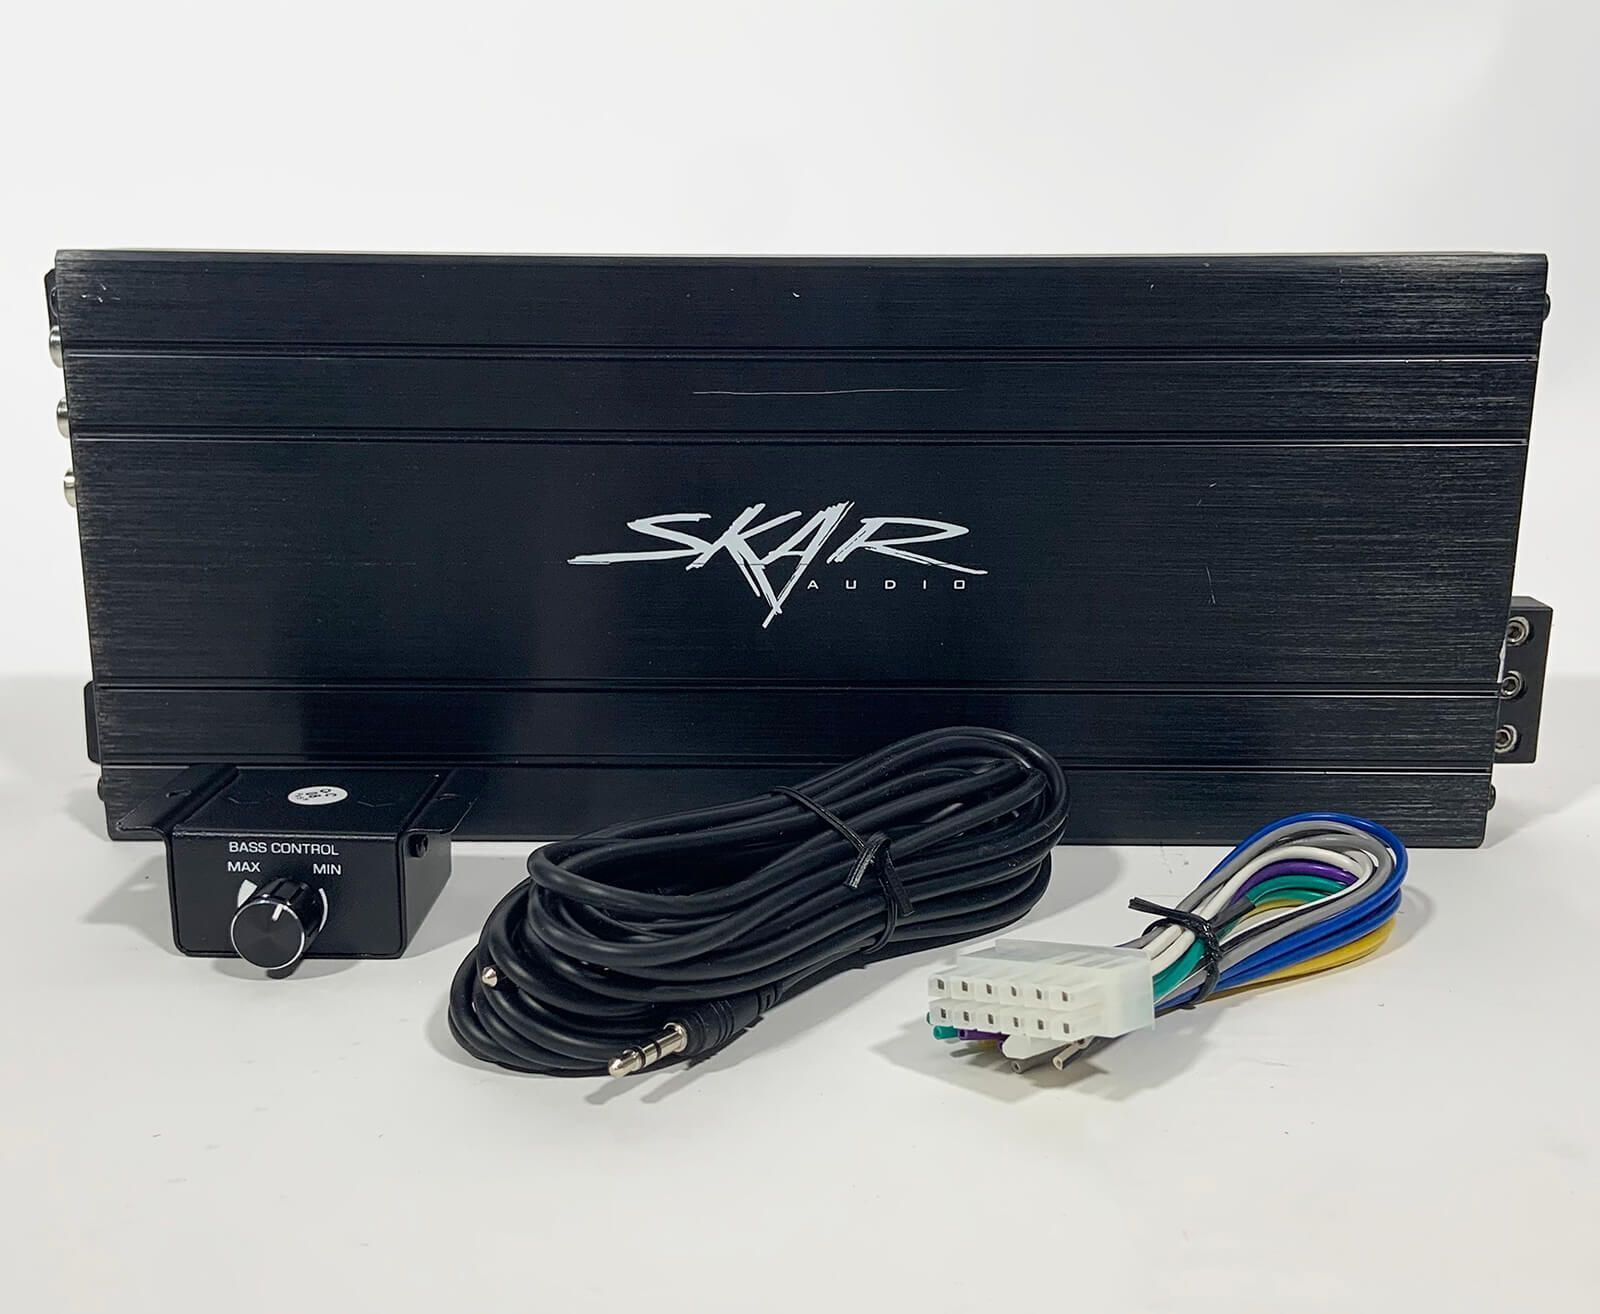 SKAR AUDIO USED SK-M9005D 900 WATT 5-CHANNEL CLASS D MINI CAR AMPLIFIER